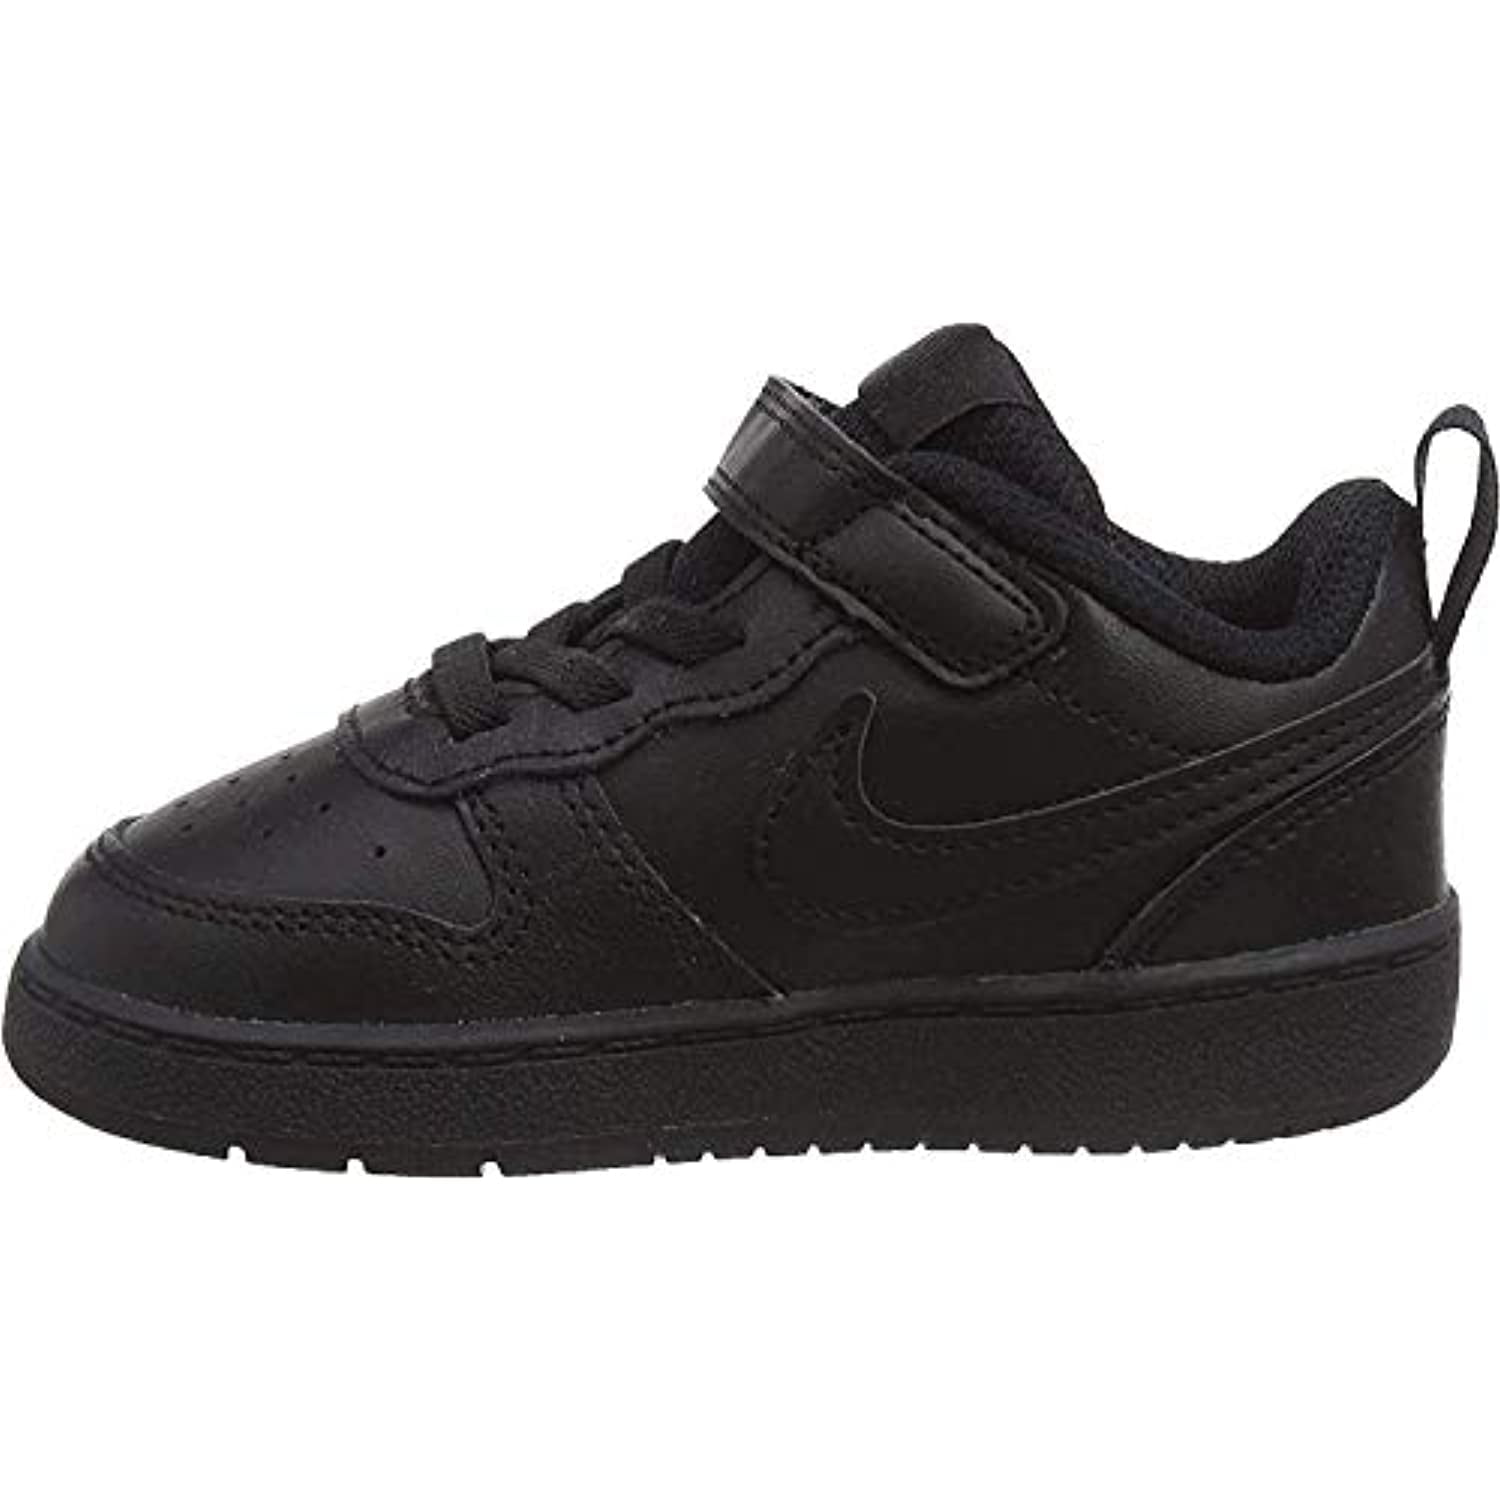 Nike Court Borough Low 2 (TDV) Toddler Bq5453-001 Size 9 Black/Black/Black